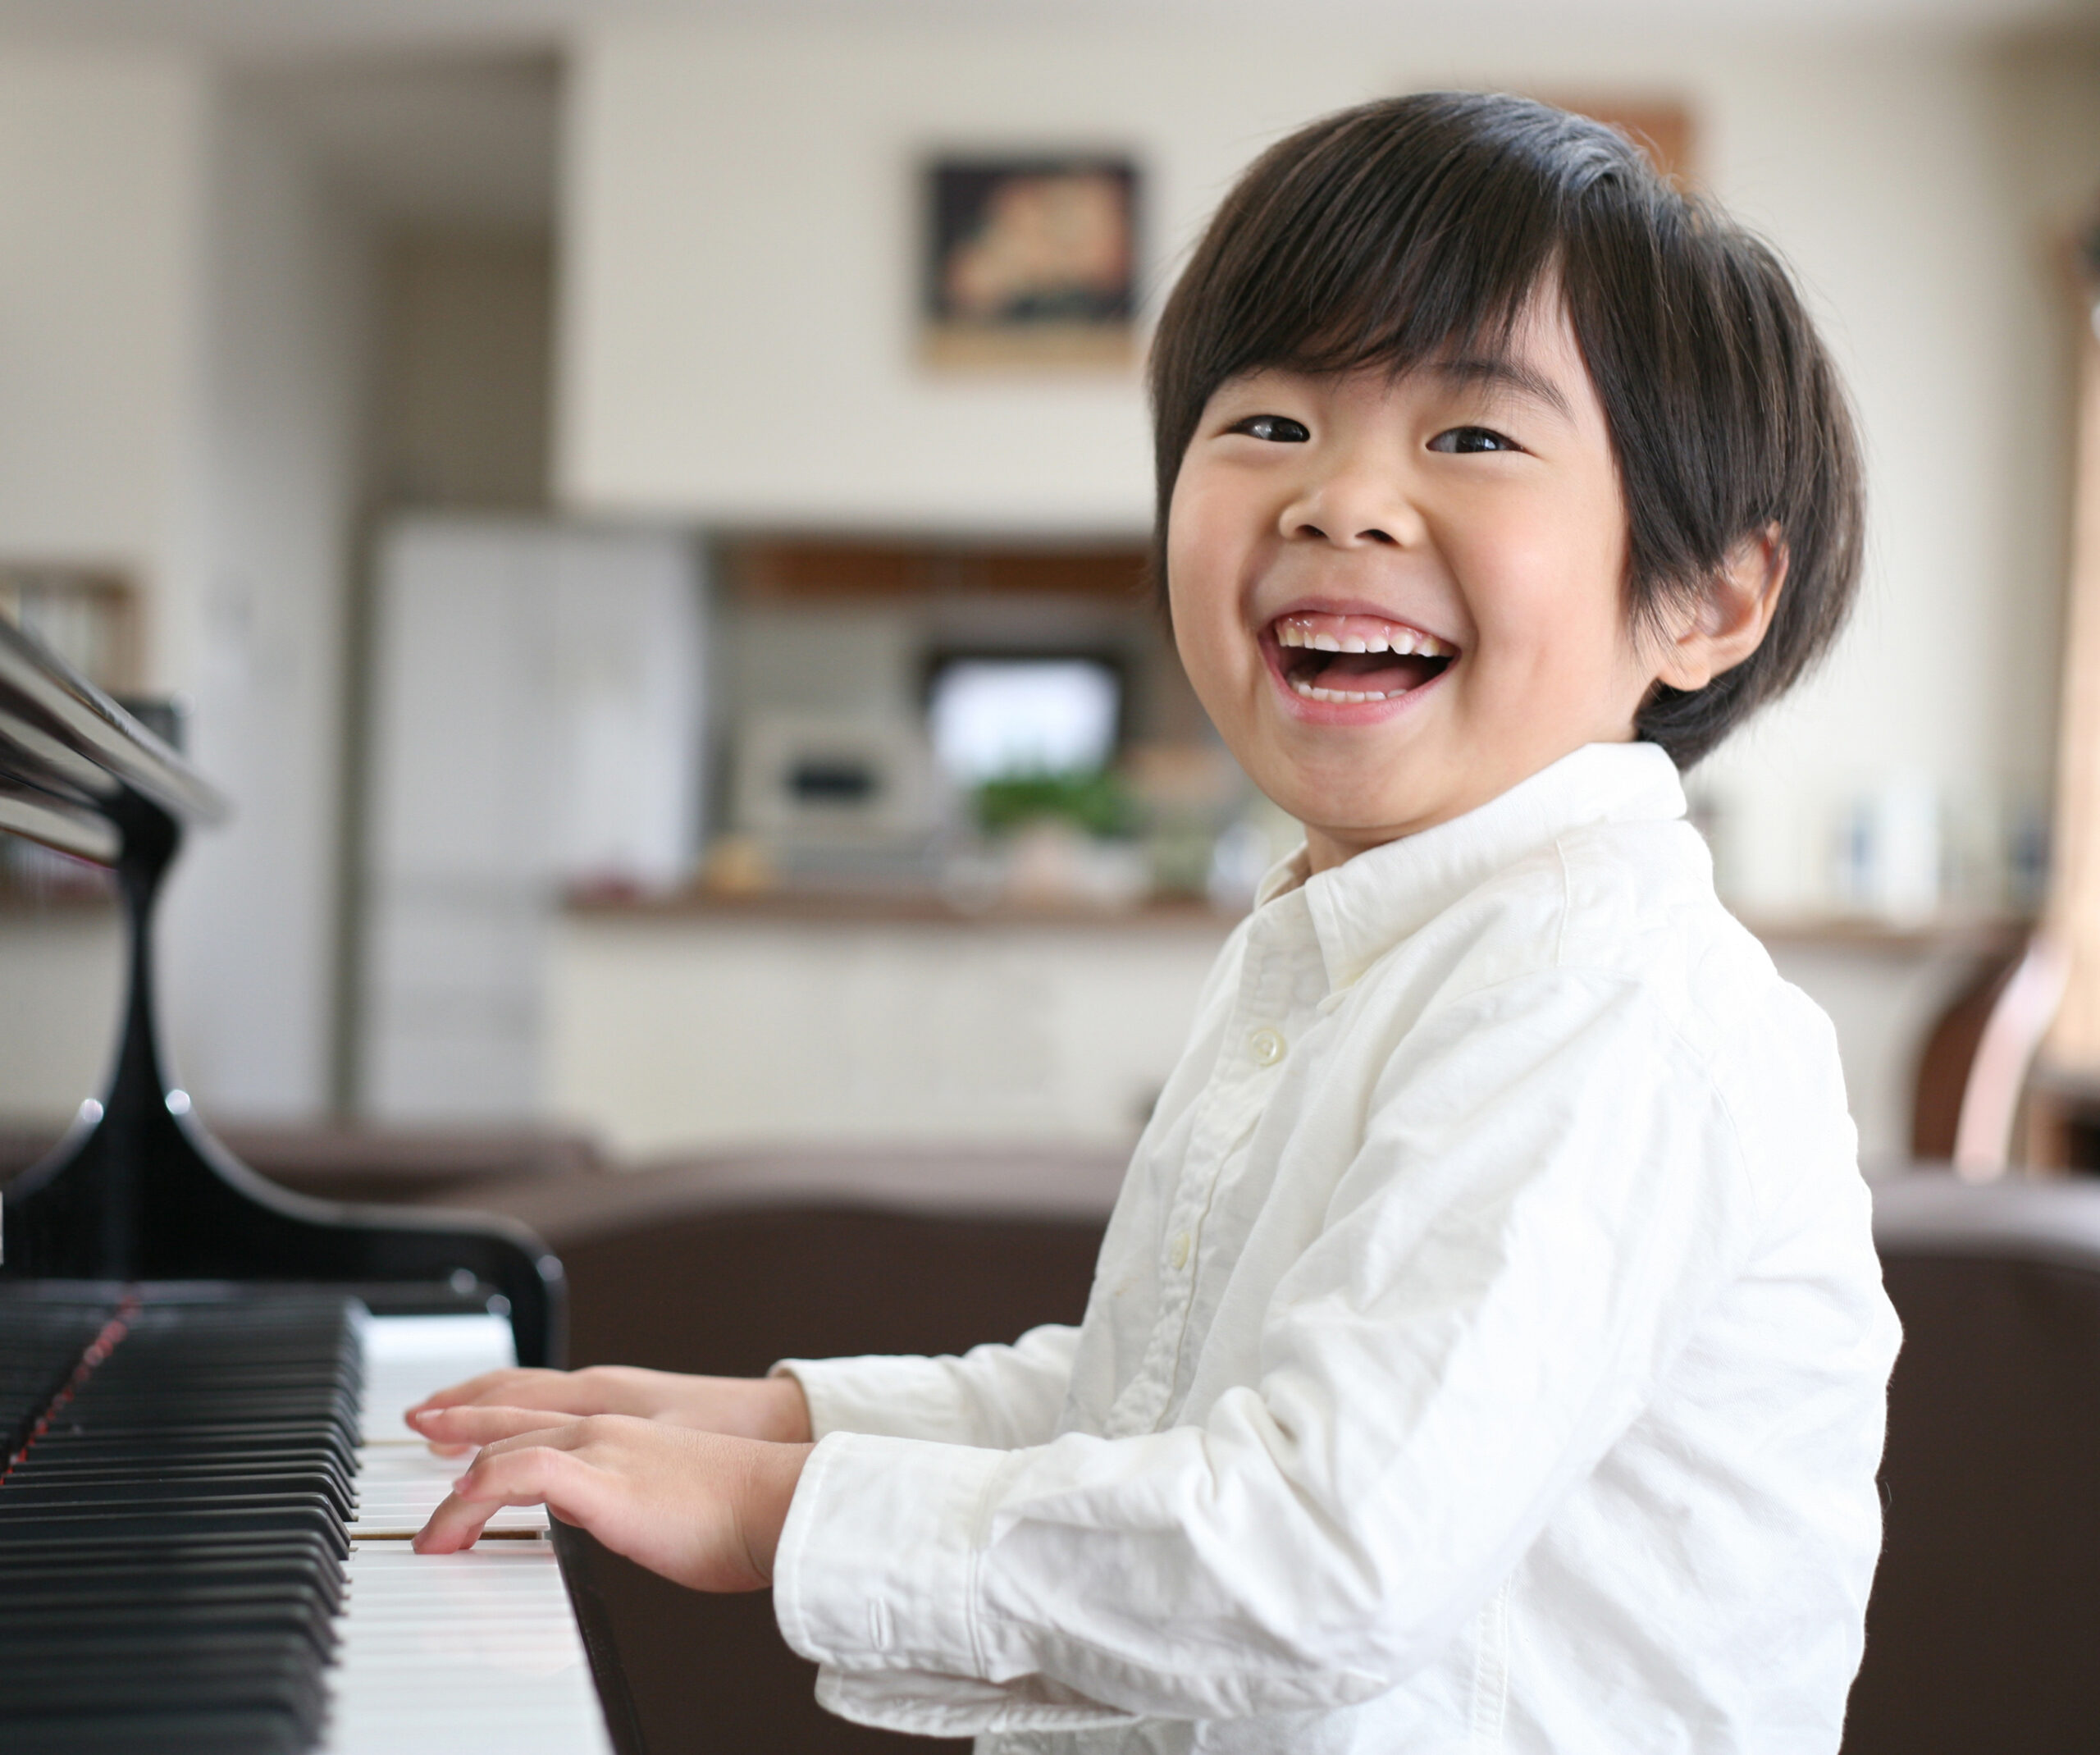 Happy boy playing piano